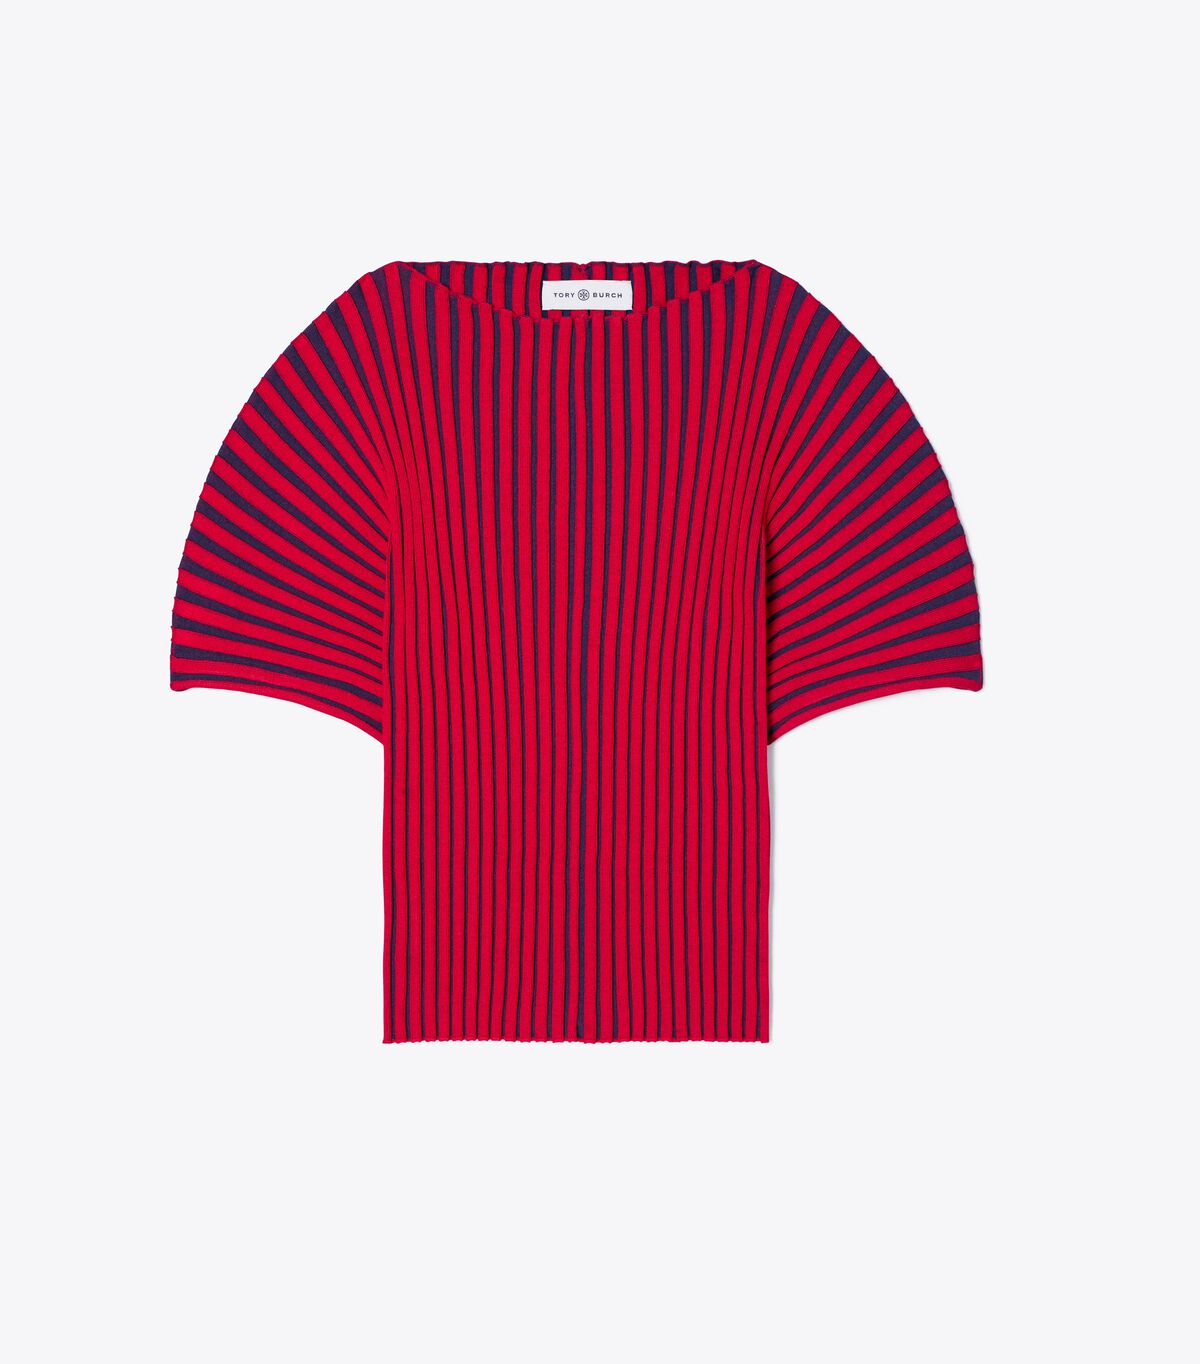 Plaited-Rib Short-Sleeve Sweater